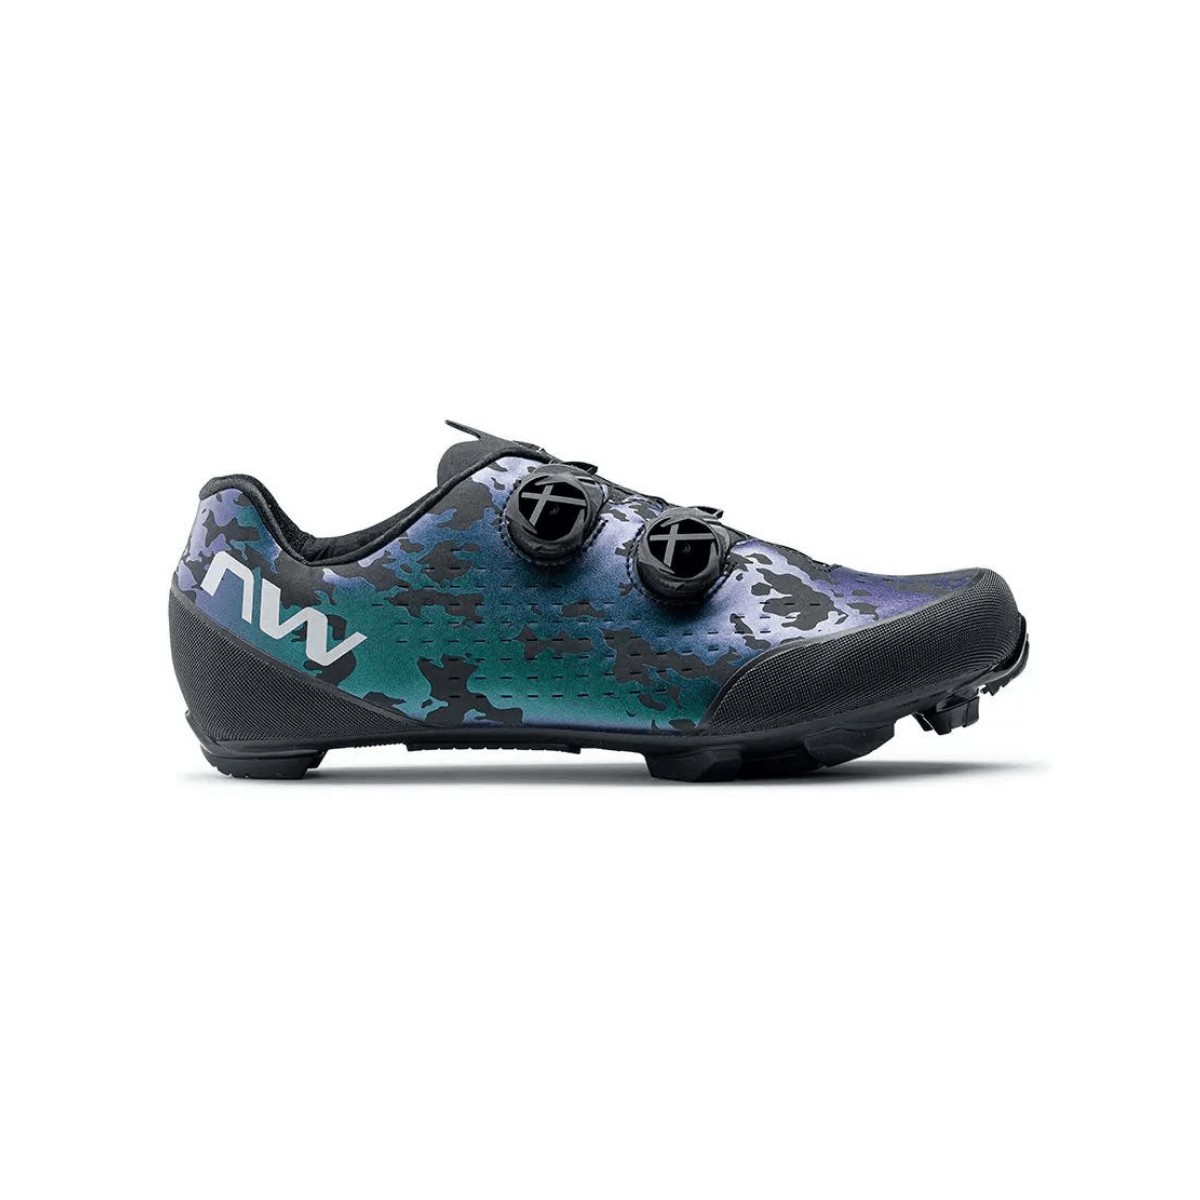 Northwave Rebel 3 MTB Shoes Iridescent, Size 42 - EUR